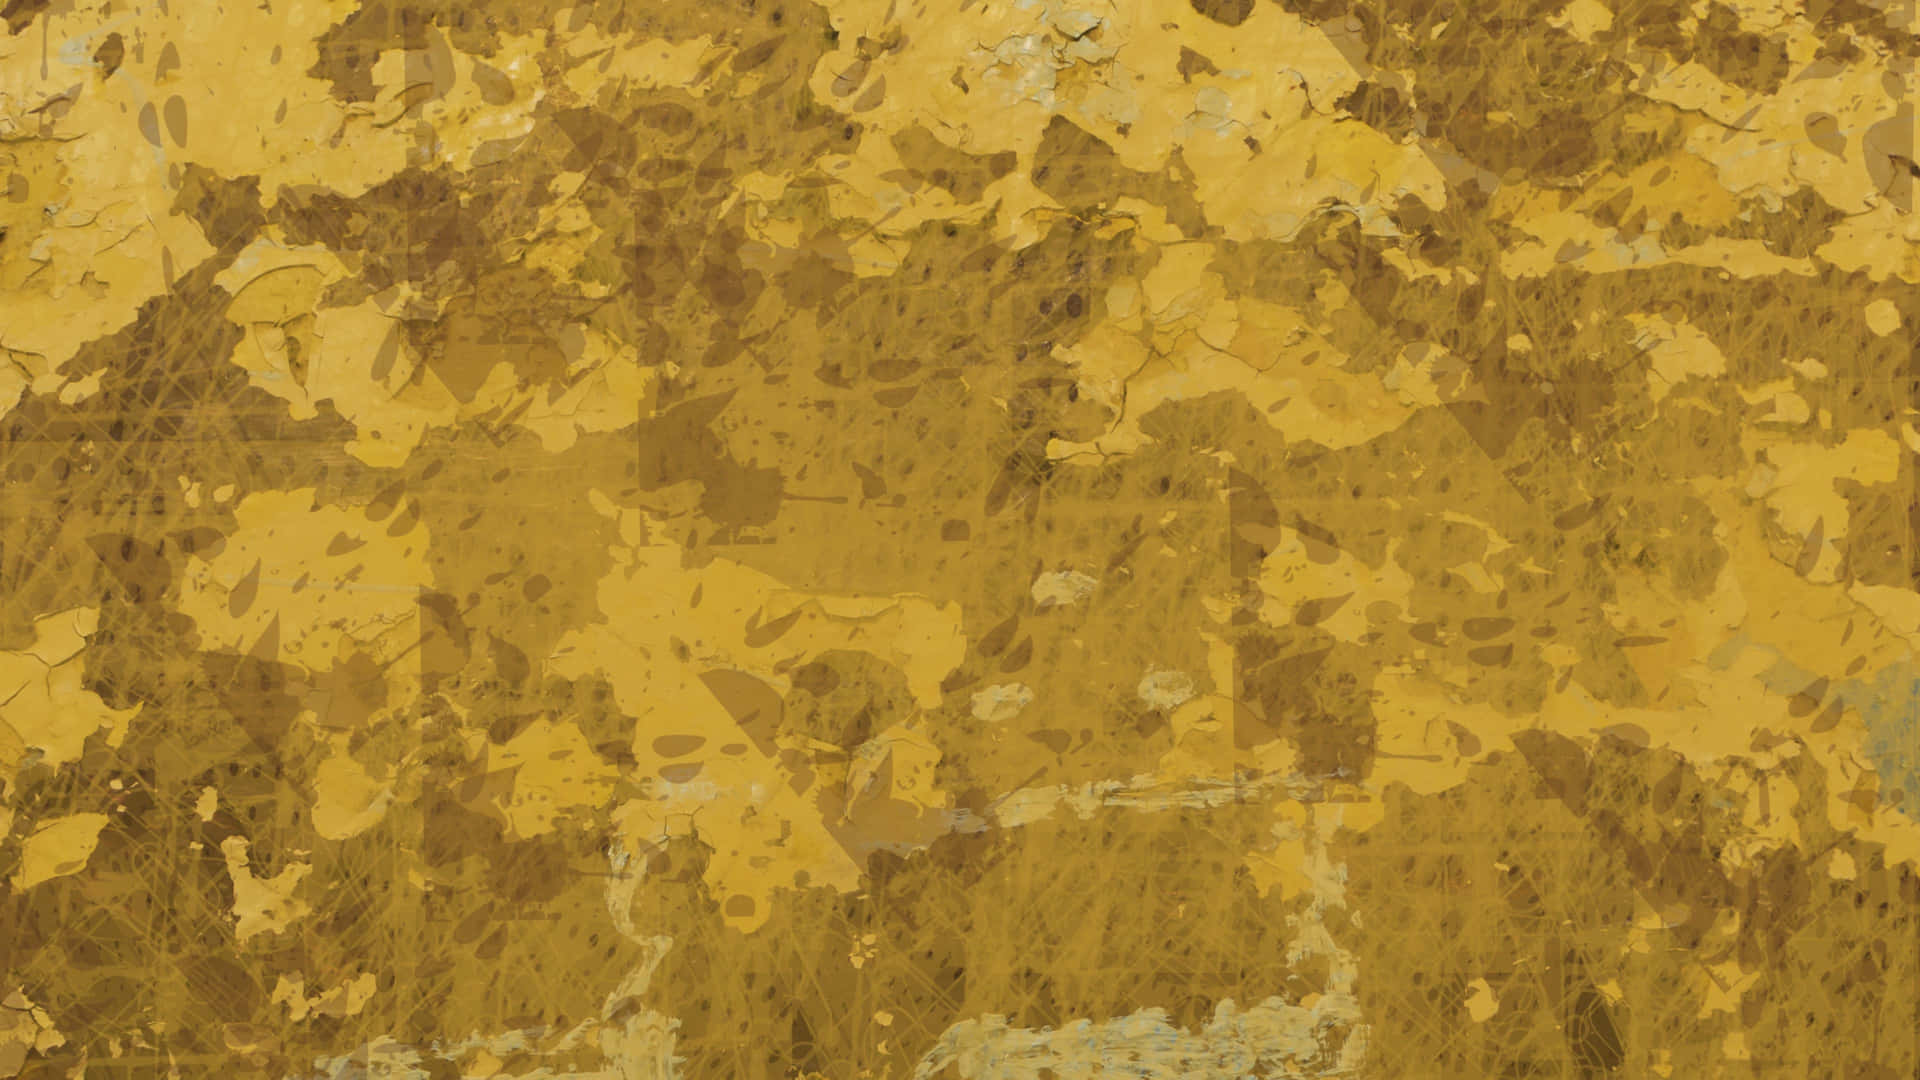 Yellow Grunge Texture Background